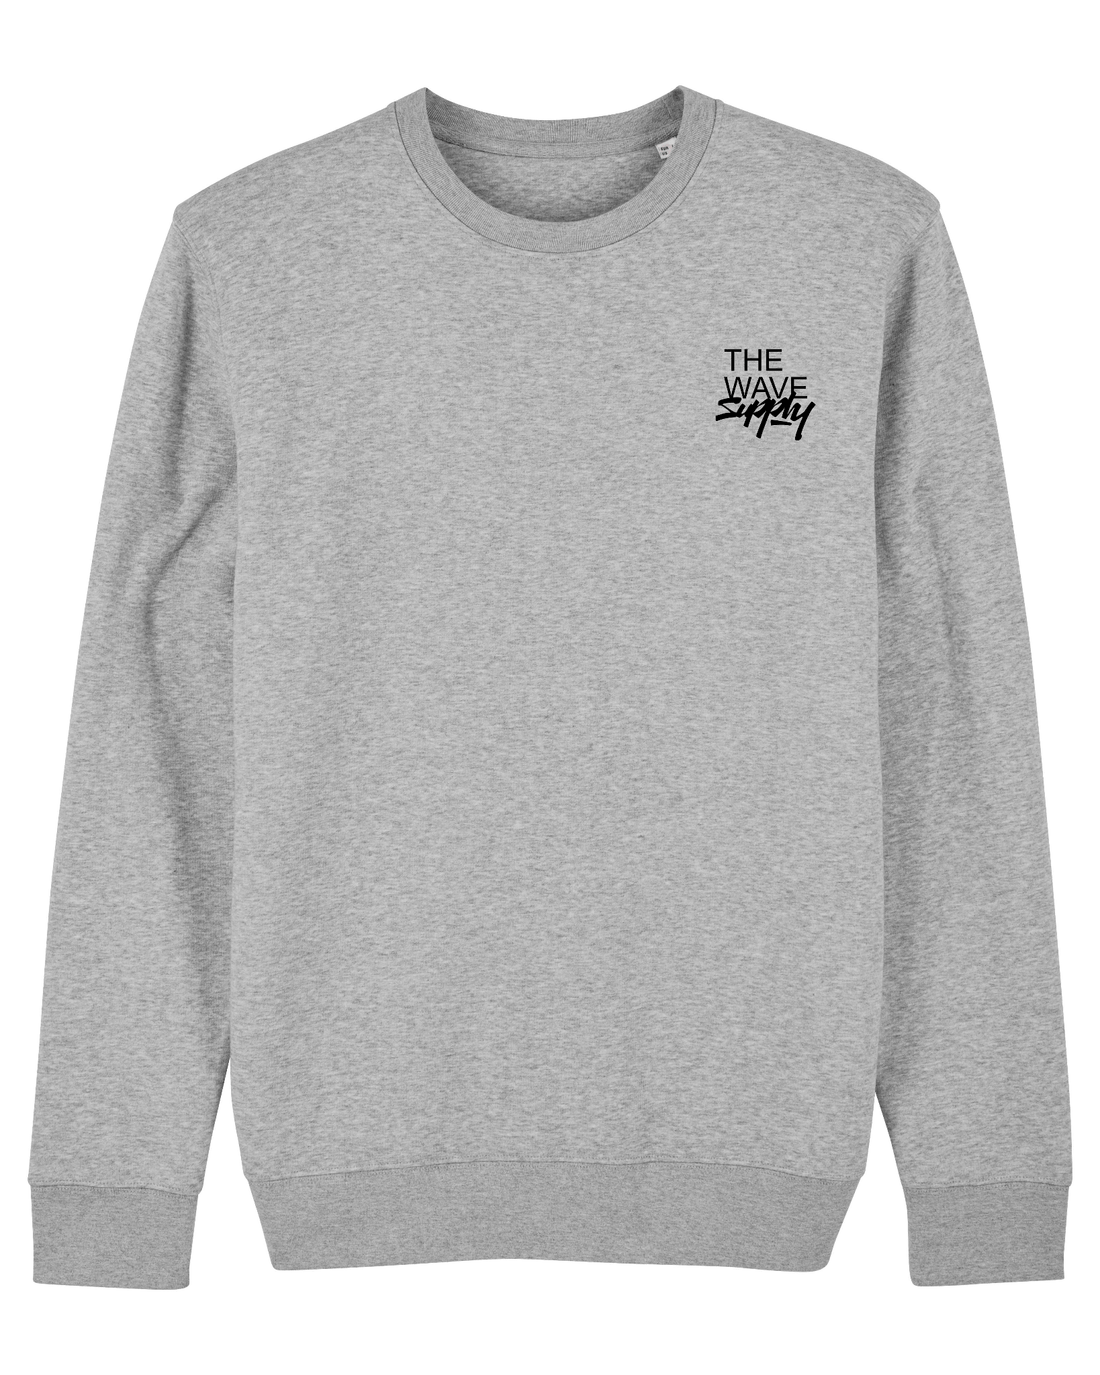 Grey Skater Sweatshirt, Catch The Wave Front Print